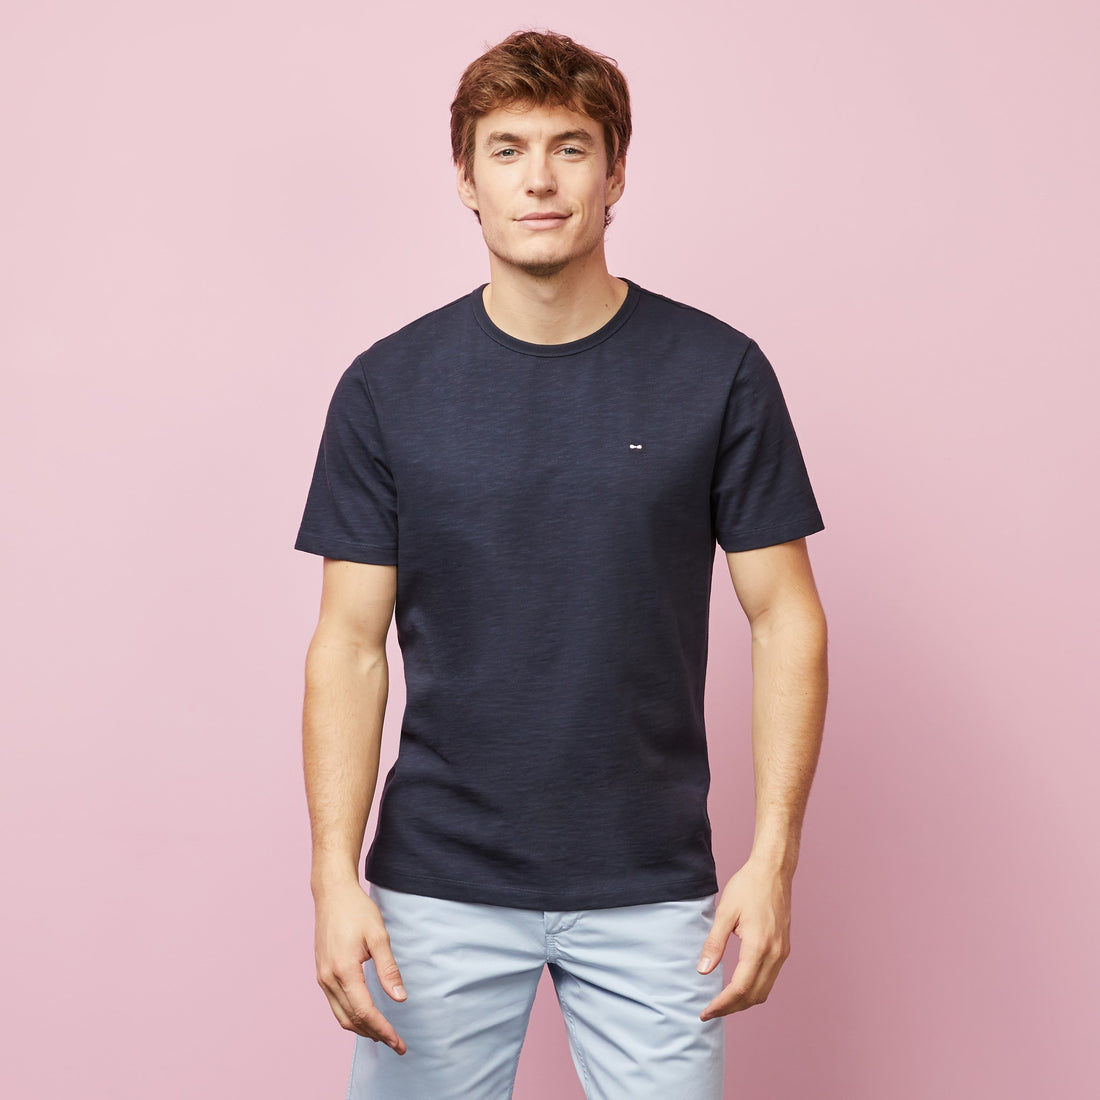 Plain Navy Blue Short-Sleeved T-Shirt